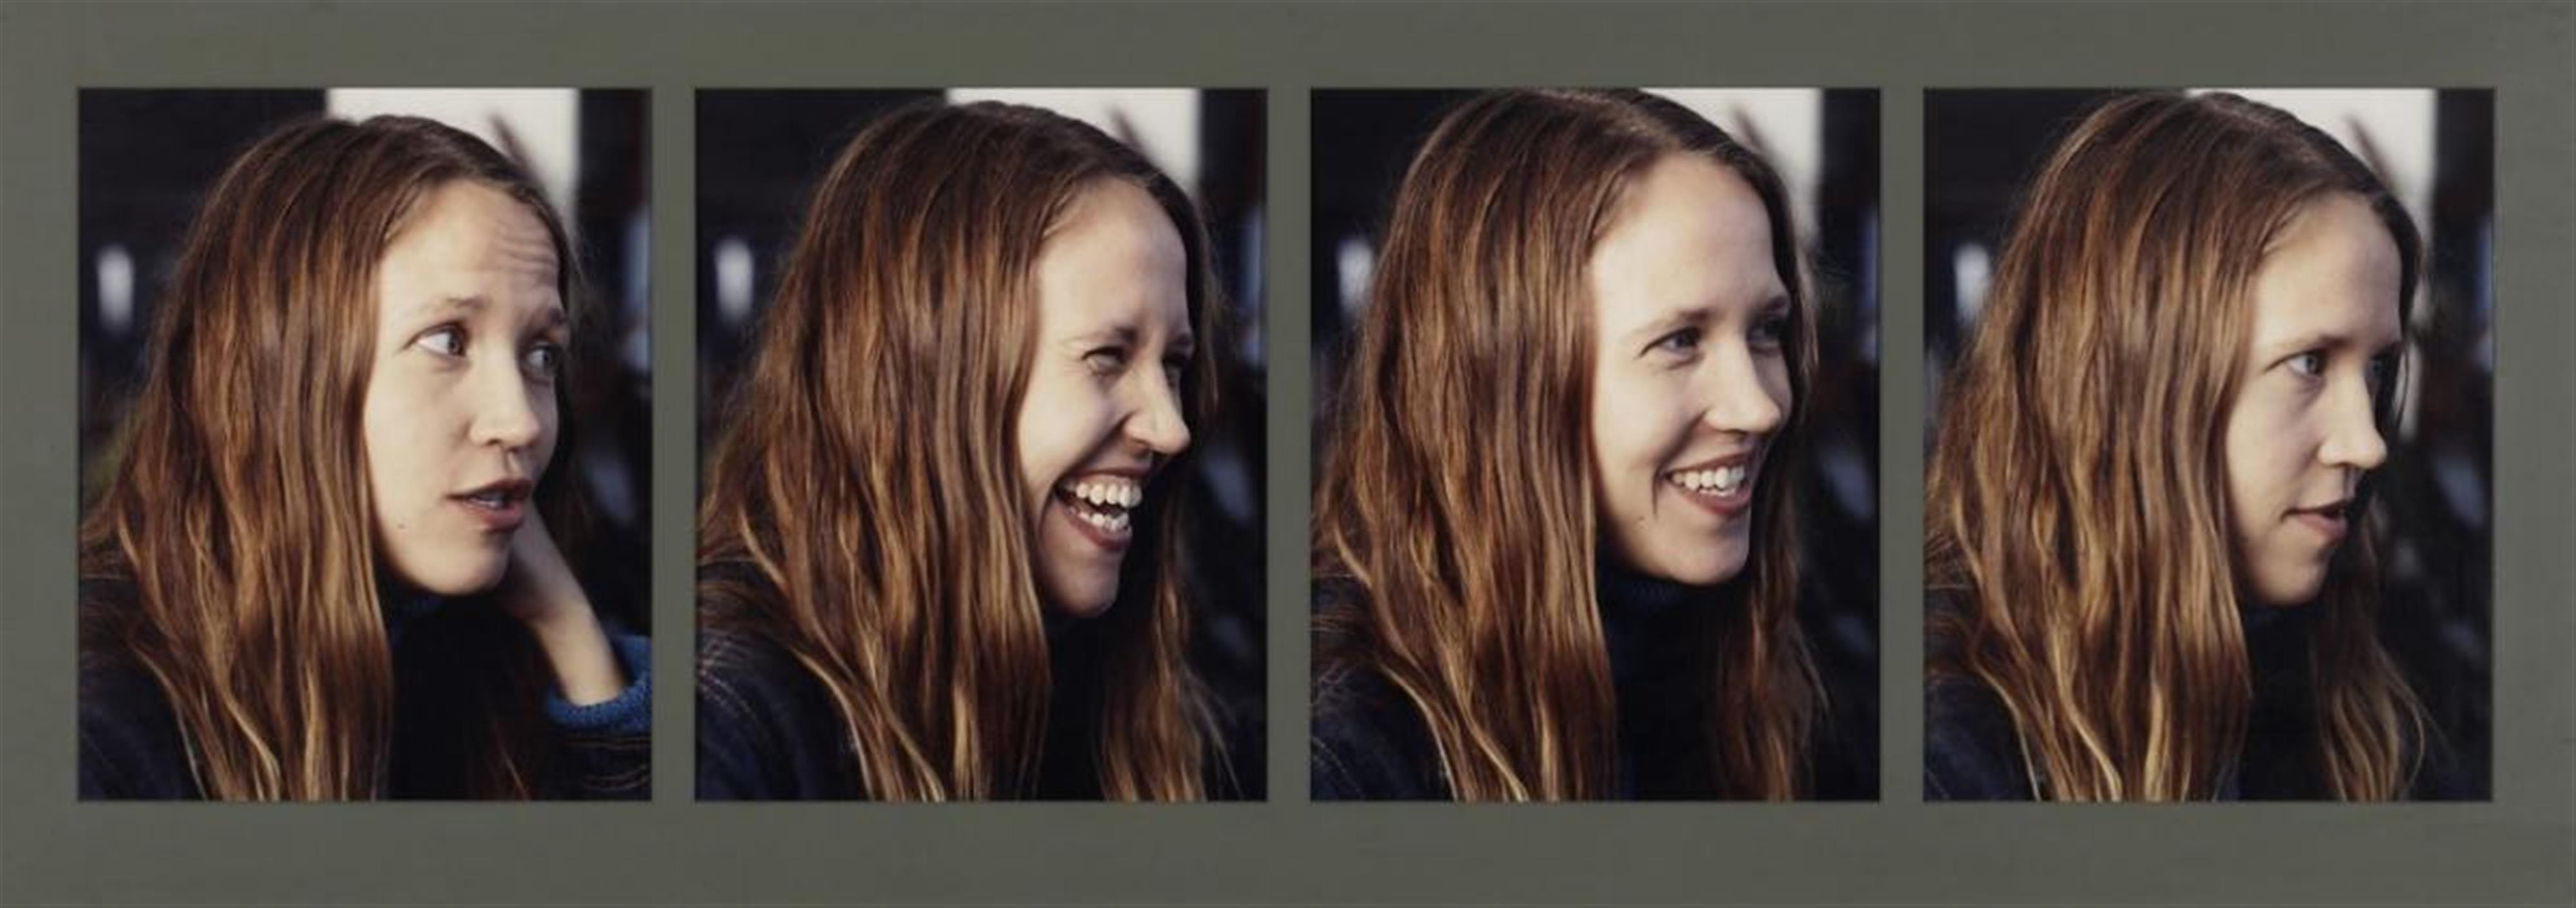 Eija-Liisa Ahtila - LAUGH (AUS DER SERIE: ASSISTANT) - image-1